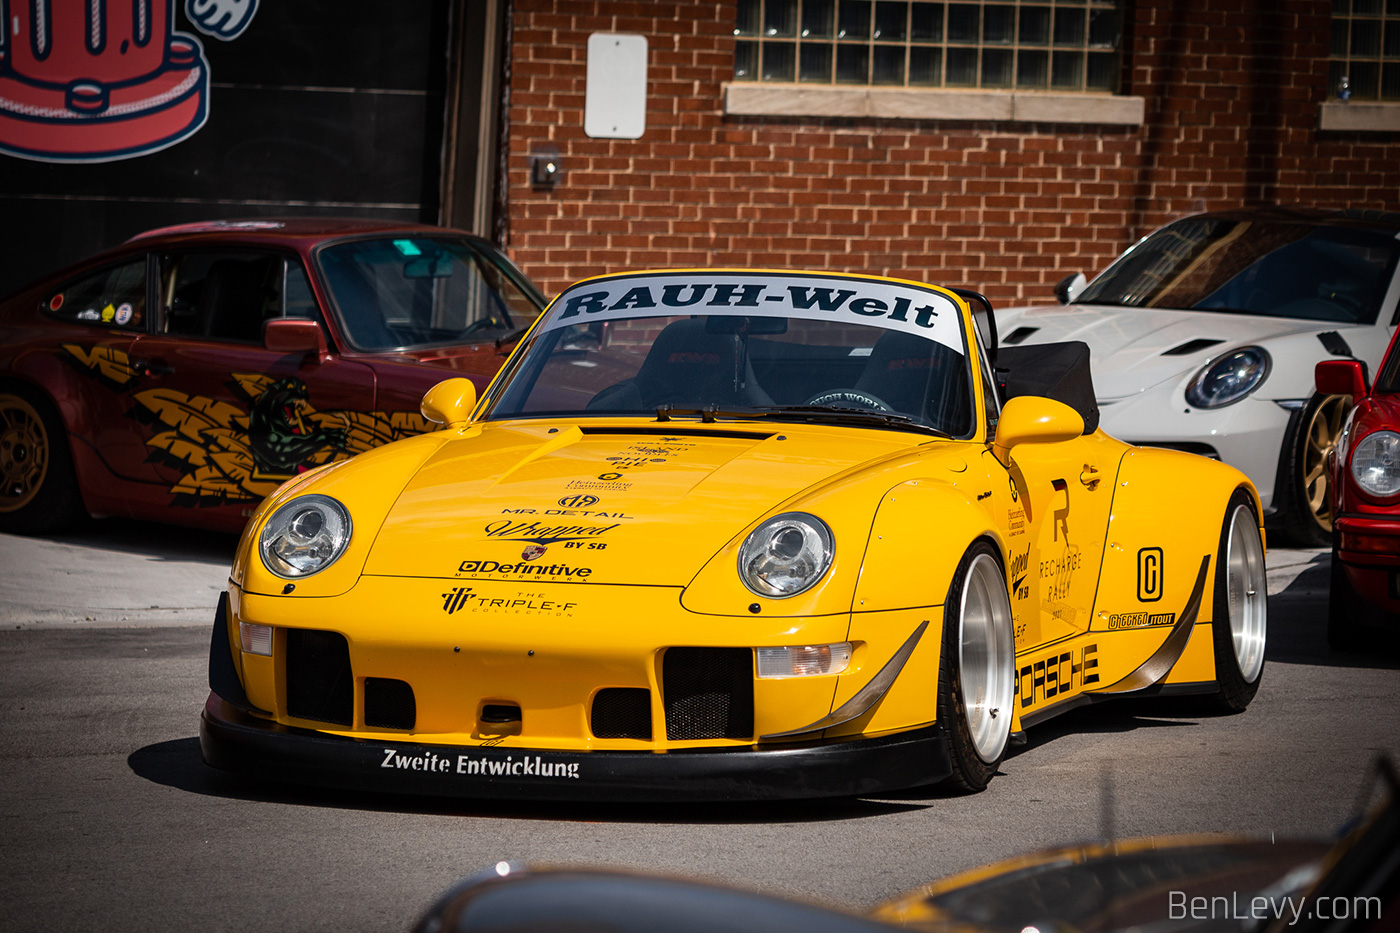 Yellow Porsche 911 (993) on Deep Dish Wheels